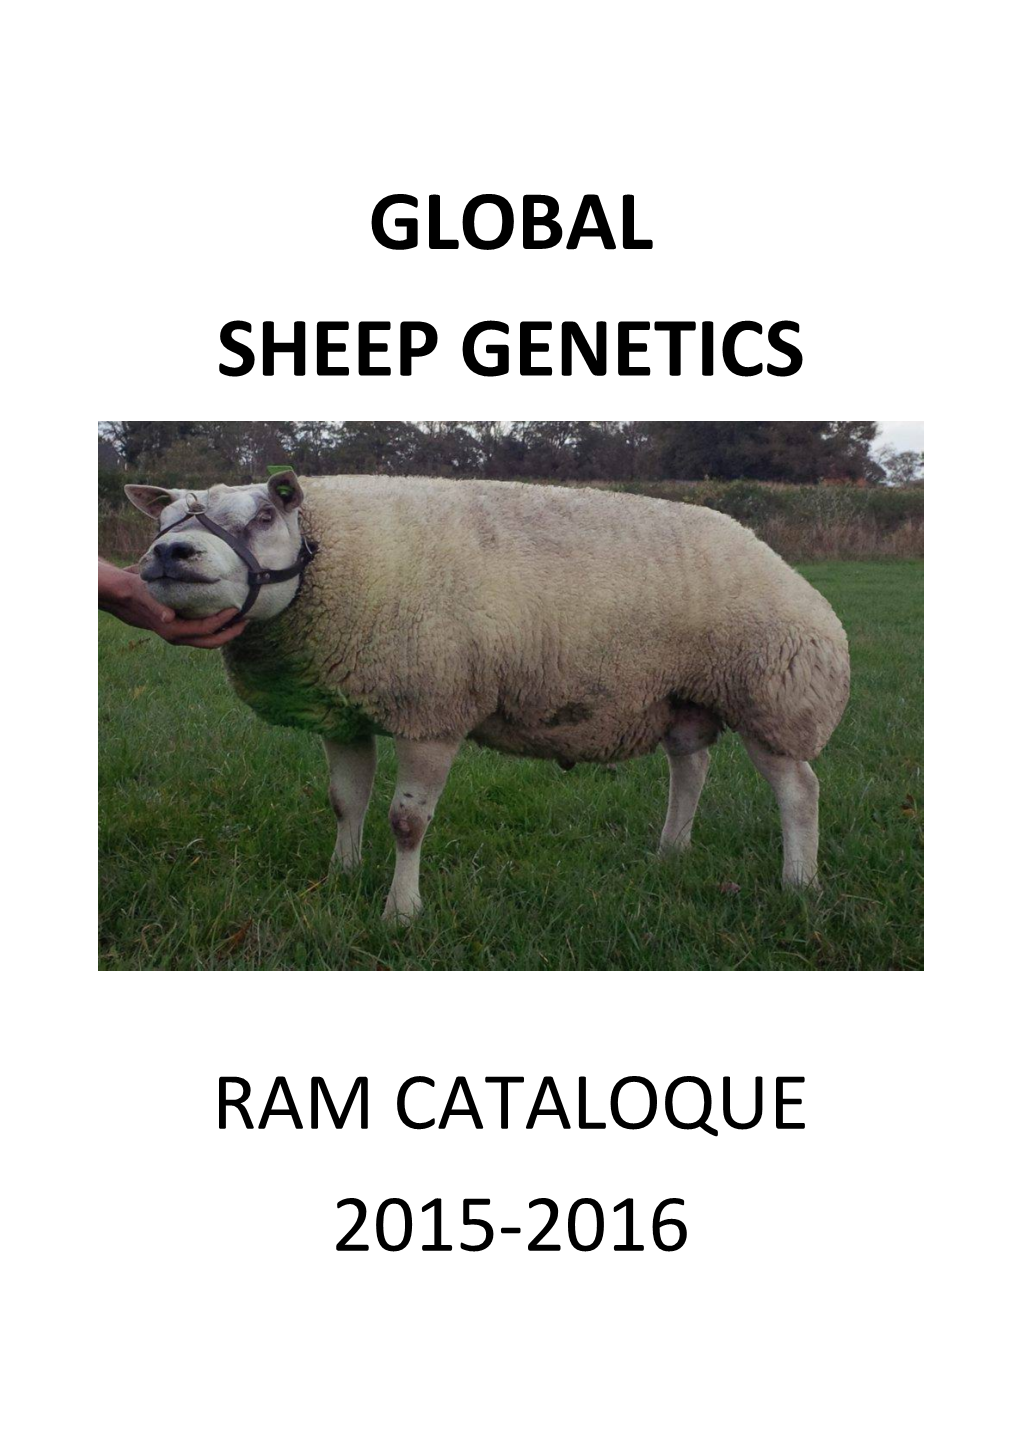 Welcome to Global Sheep Genetics!